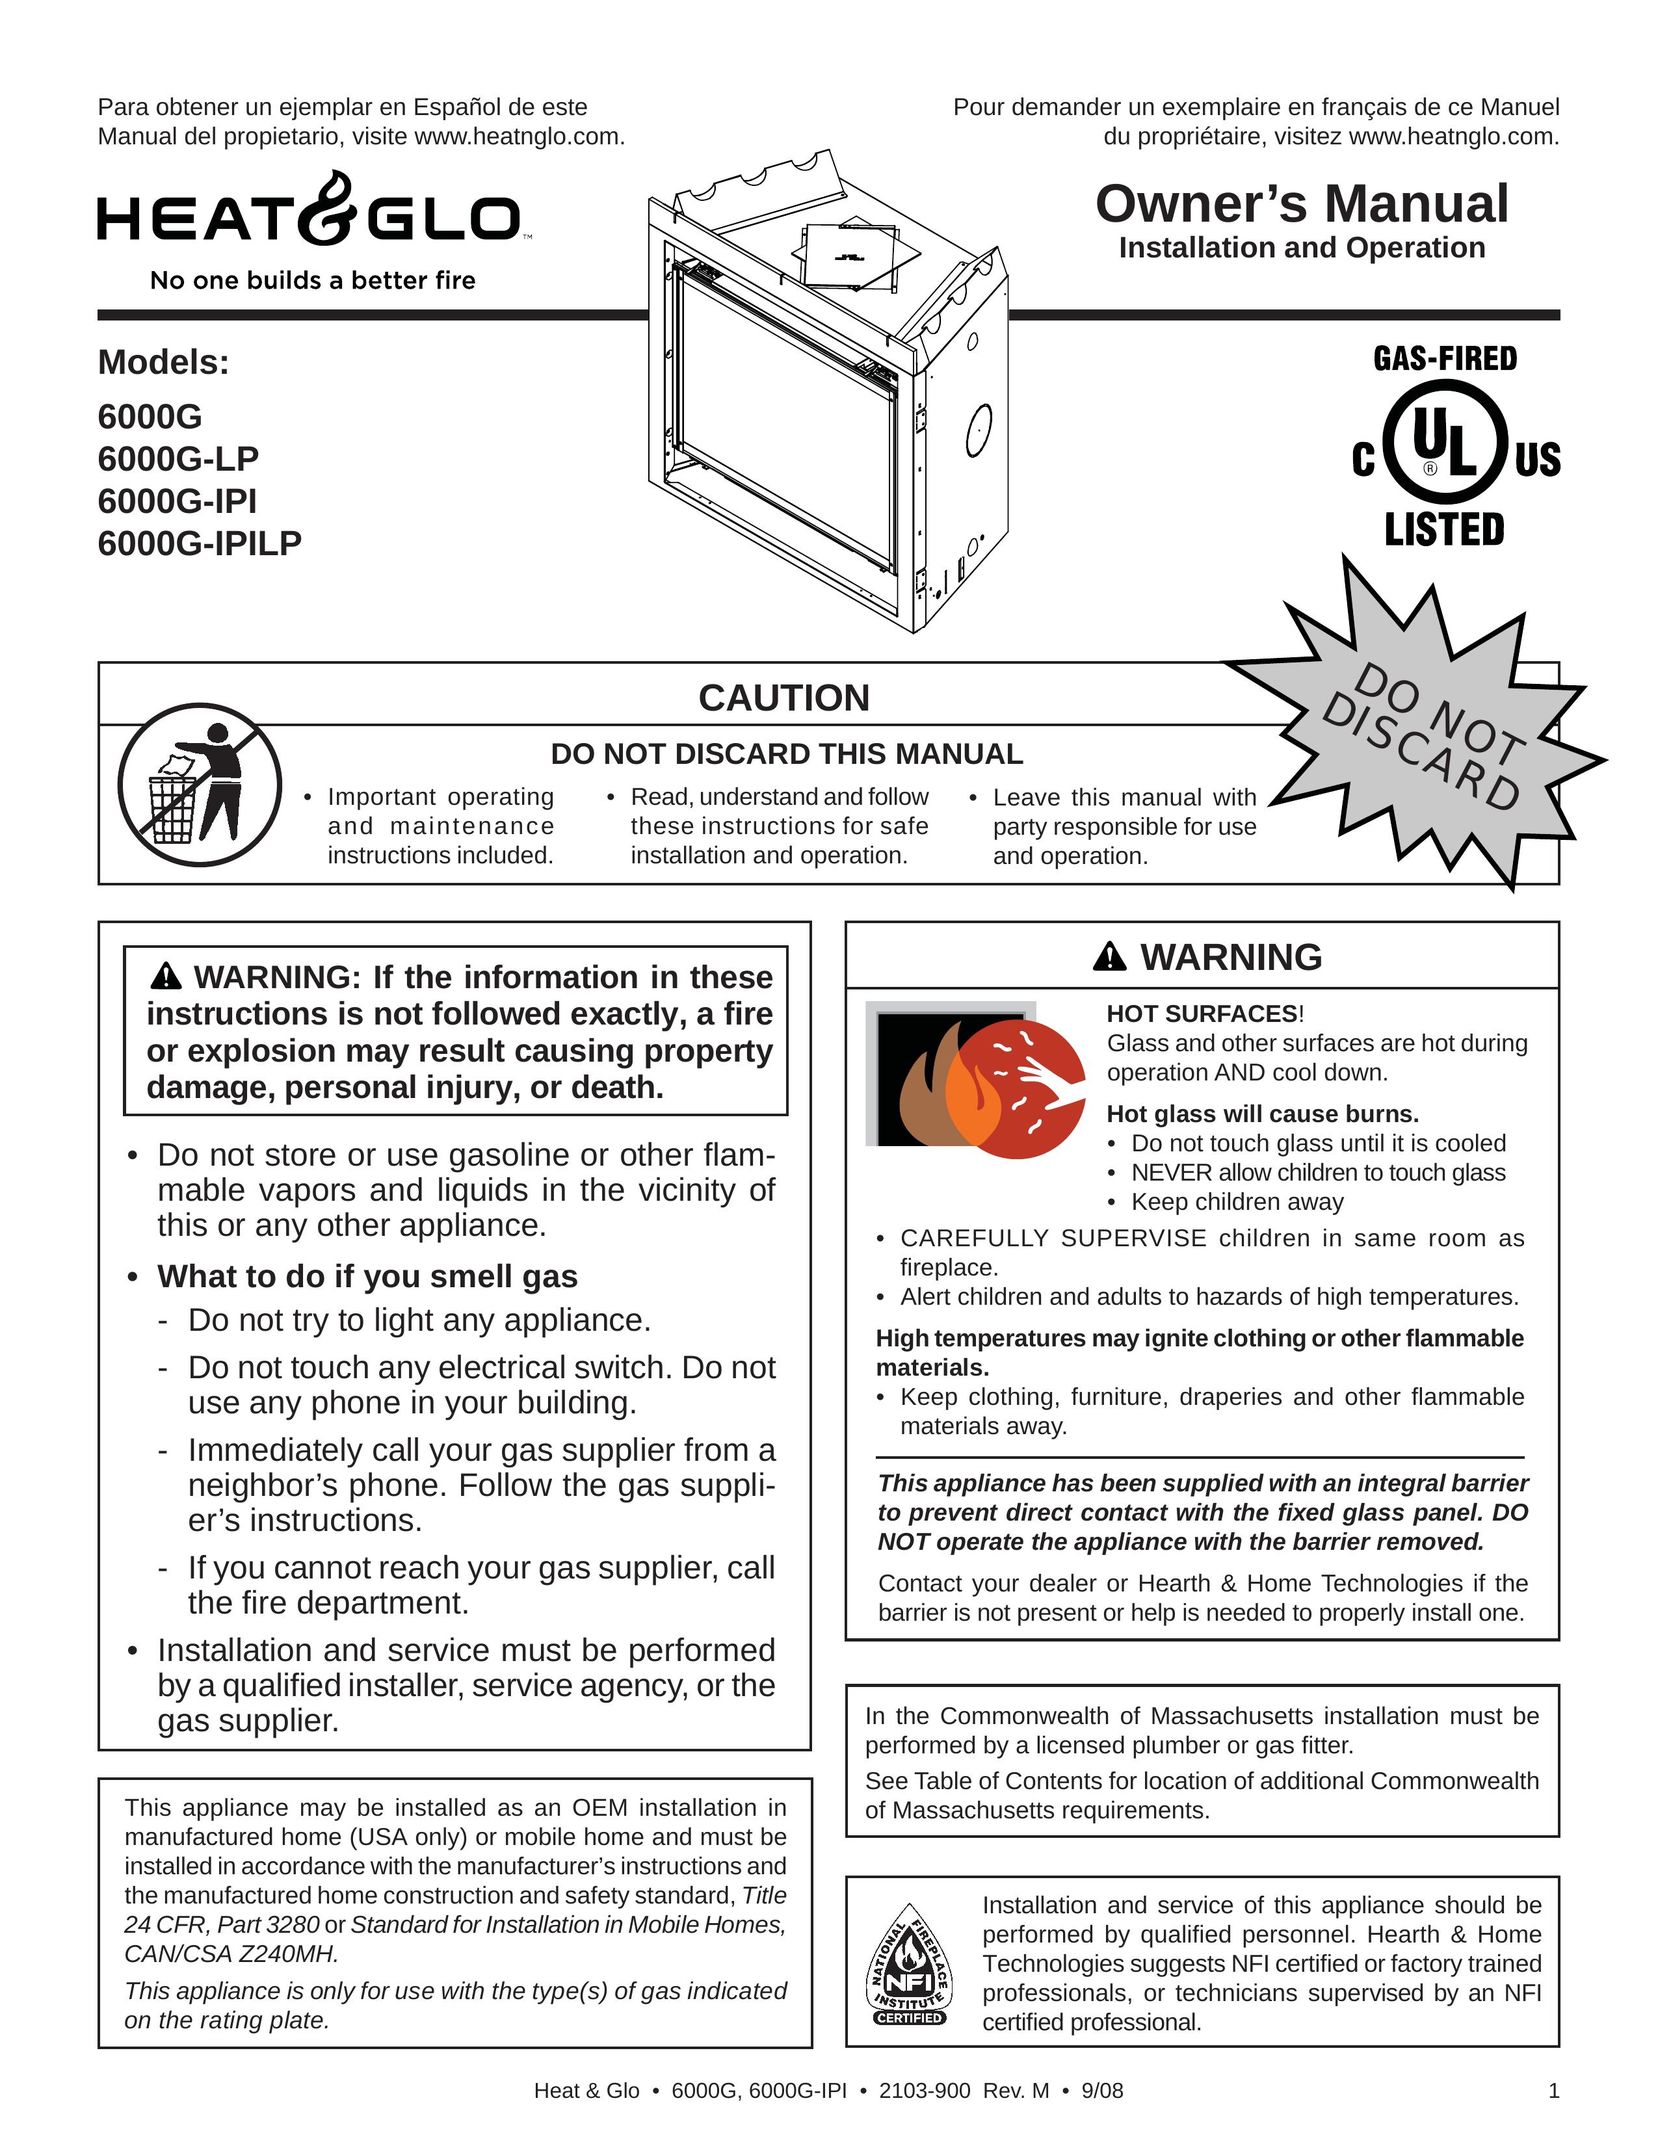 Heat & Glo LifeStyle 6000G-IPI Air Conditioner User Manual